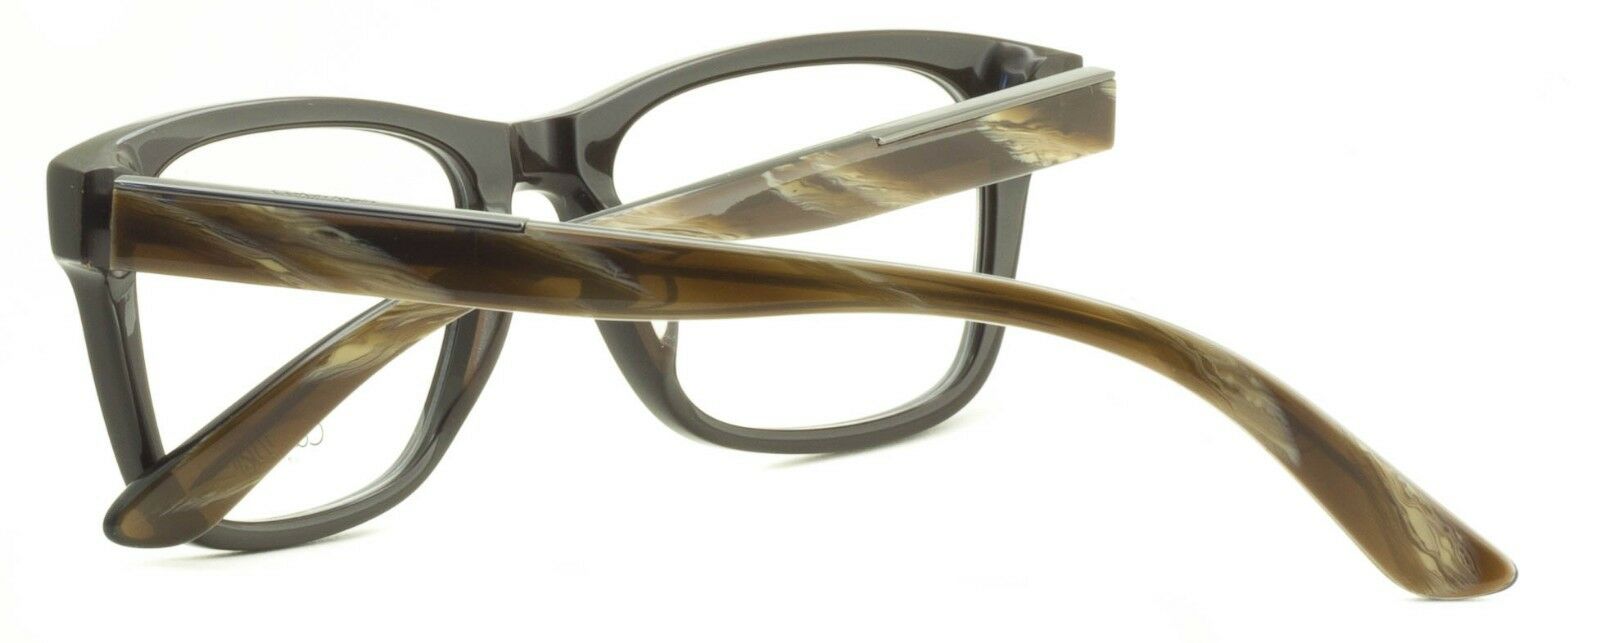 CALVIN KLEIN CK7942 223 Eyewear RX Optical FRAMES NEW Eyeglasses Glasses - BNIB